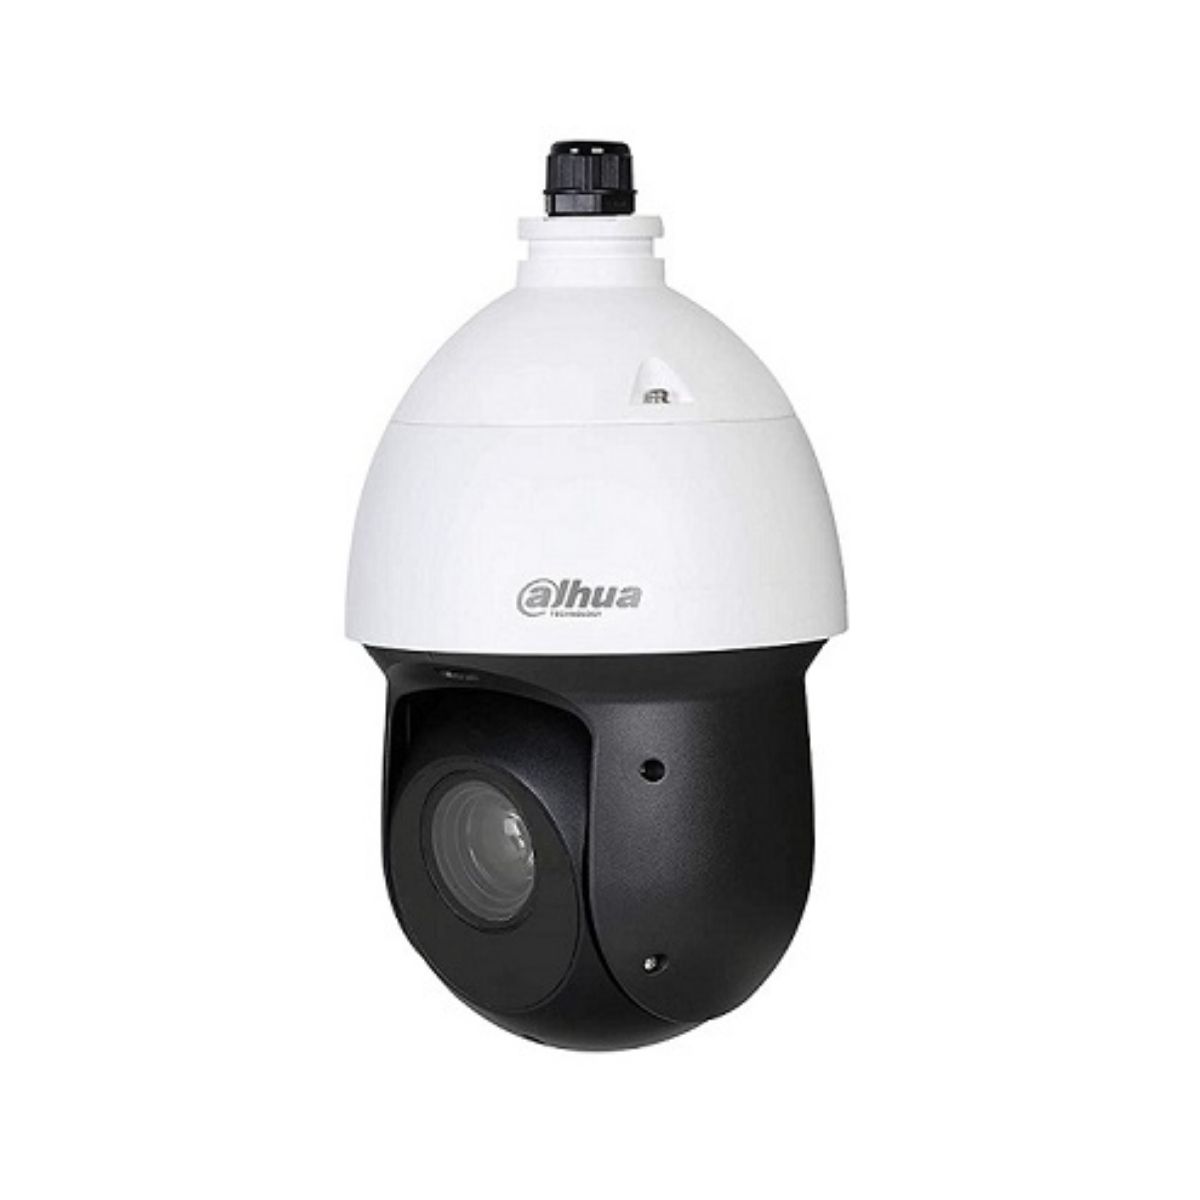 Camera Speed Dome IP Dahua DH-SD49225XA-HNR-S2 2MP, WDR 120dB, Zoom quang 25X, hồng ngoại 100m